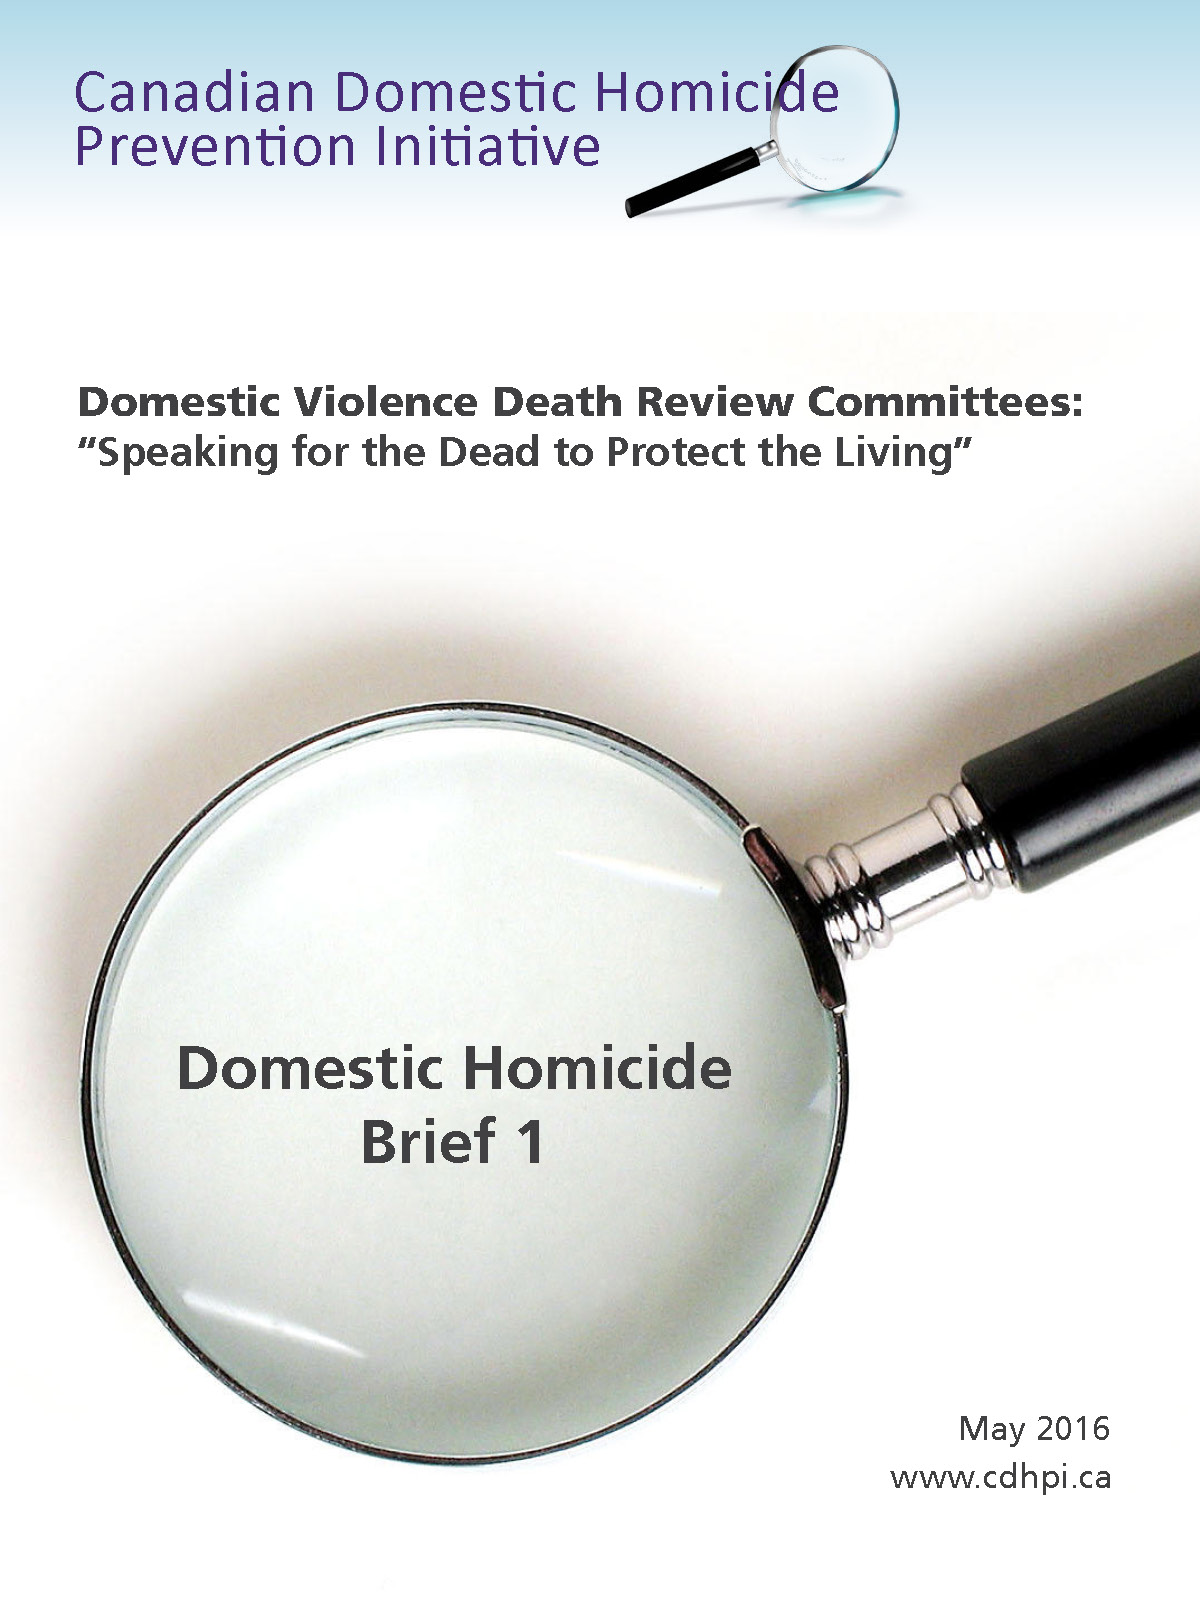 CDHPIVP Domestic Homicide Brief #1: Domestic Violence Death Review